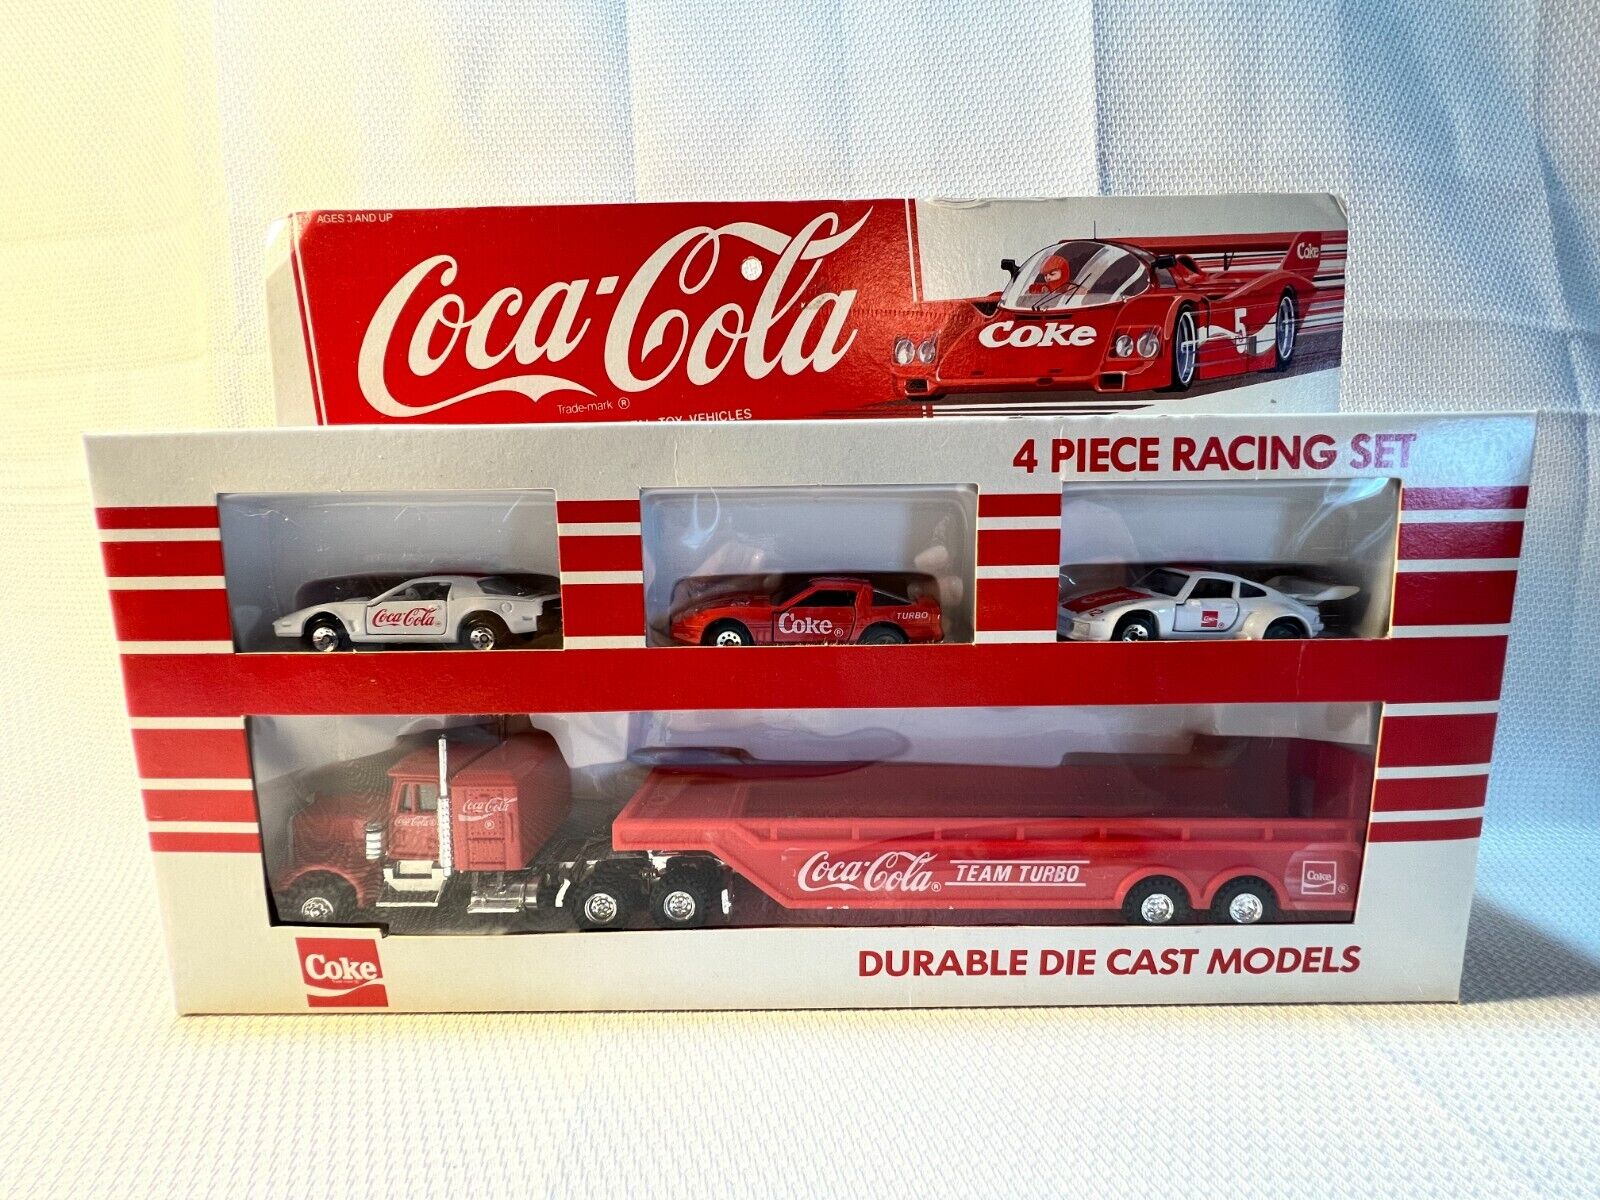 1979 Hartoy Coca Cola 4 Piece Racing Set Durable Die Cast Models Vintage Coke